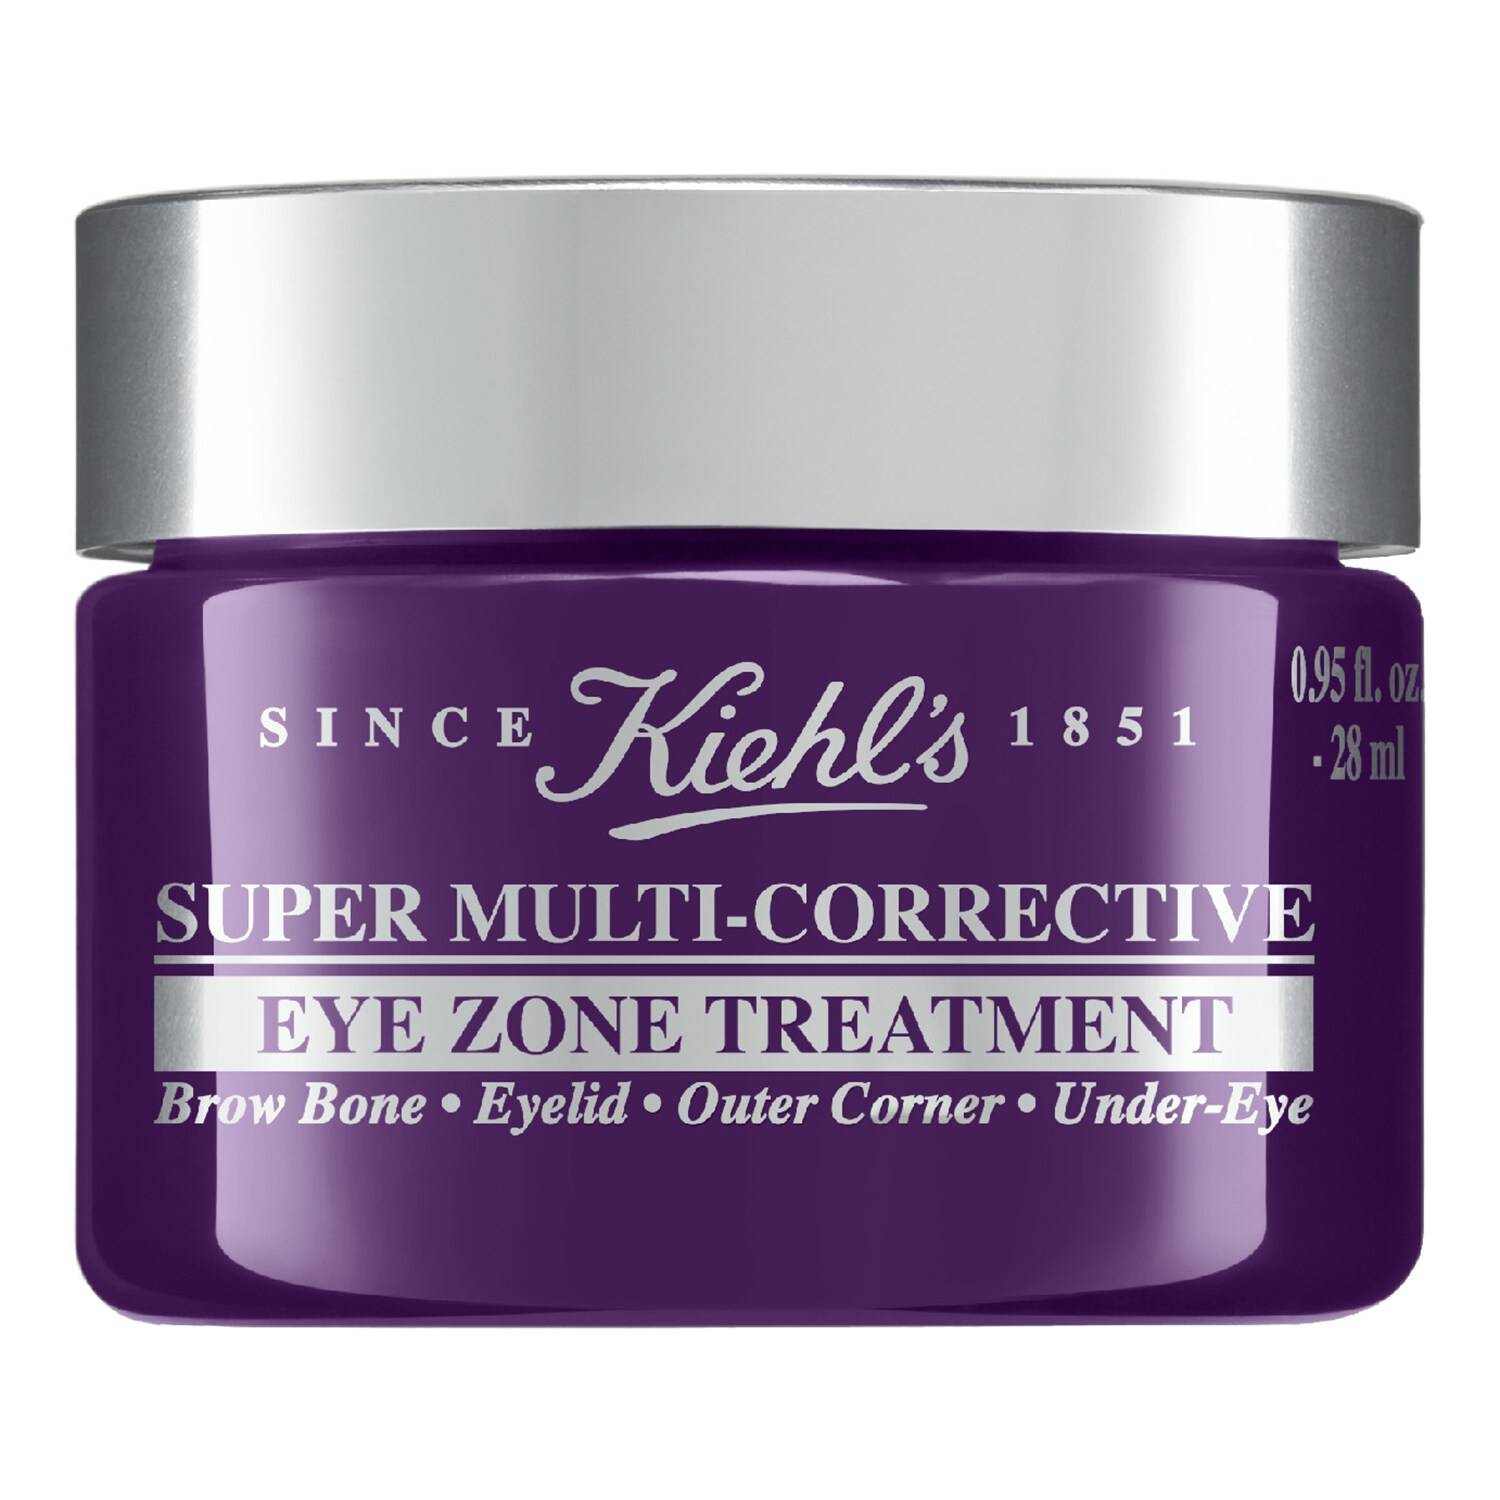 Kiehl's Super Multi-Corrective Eye Zone Treatment 28ml